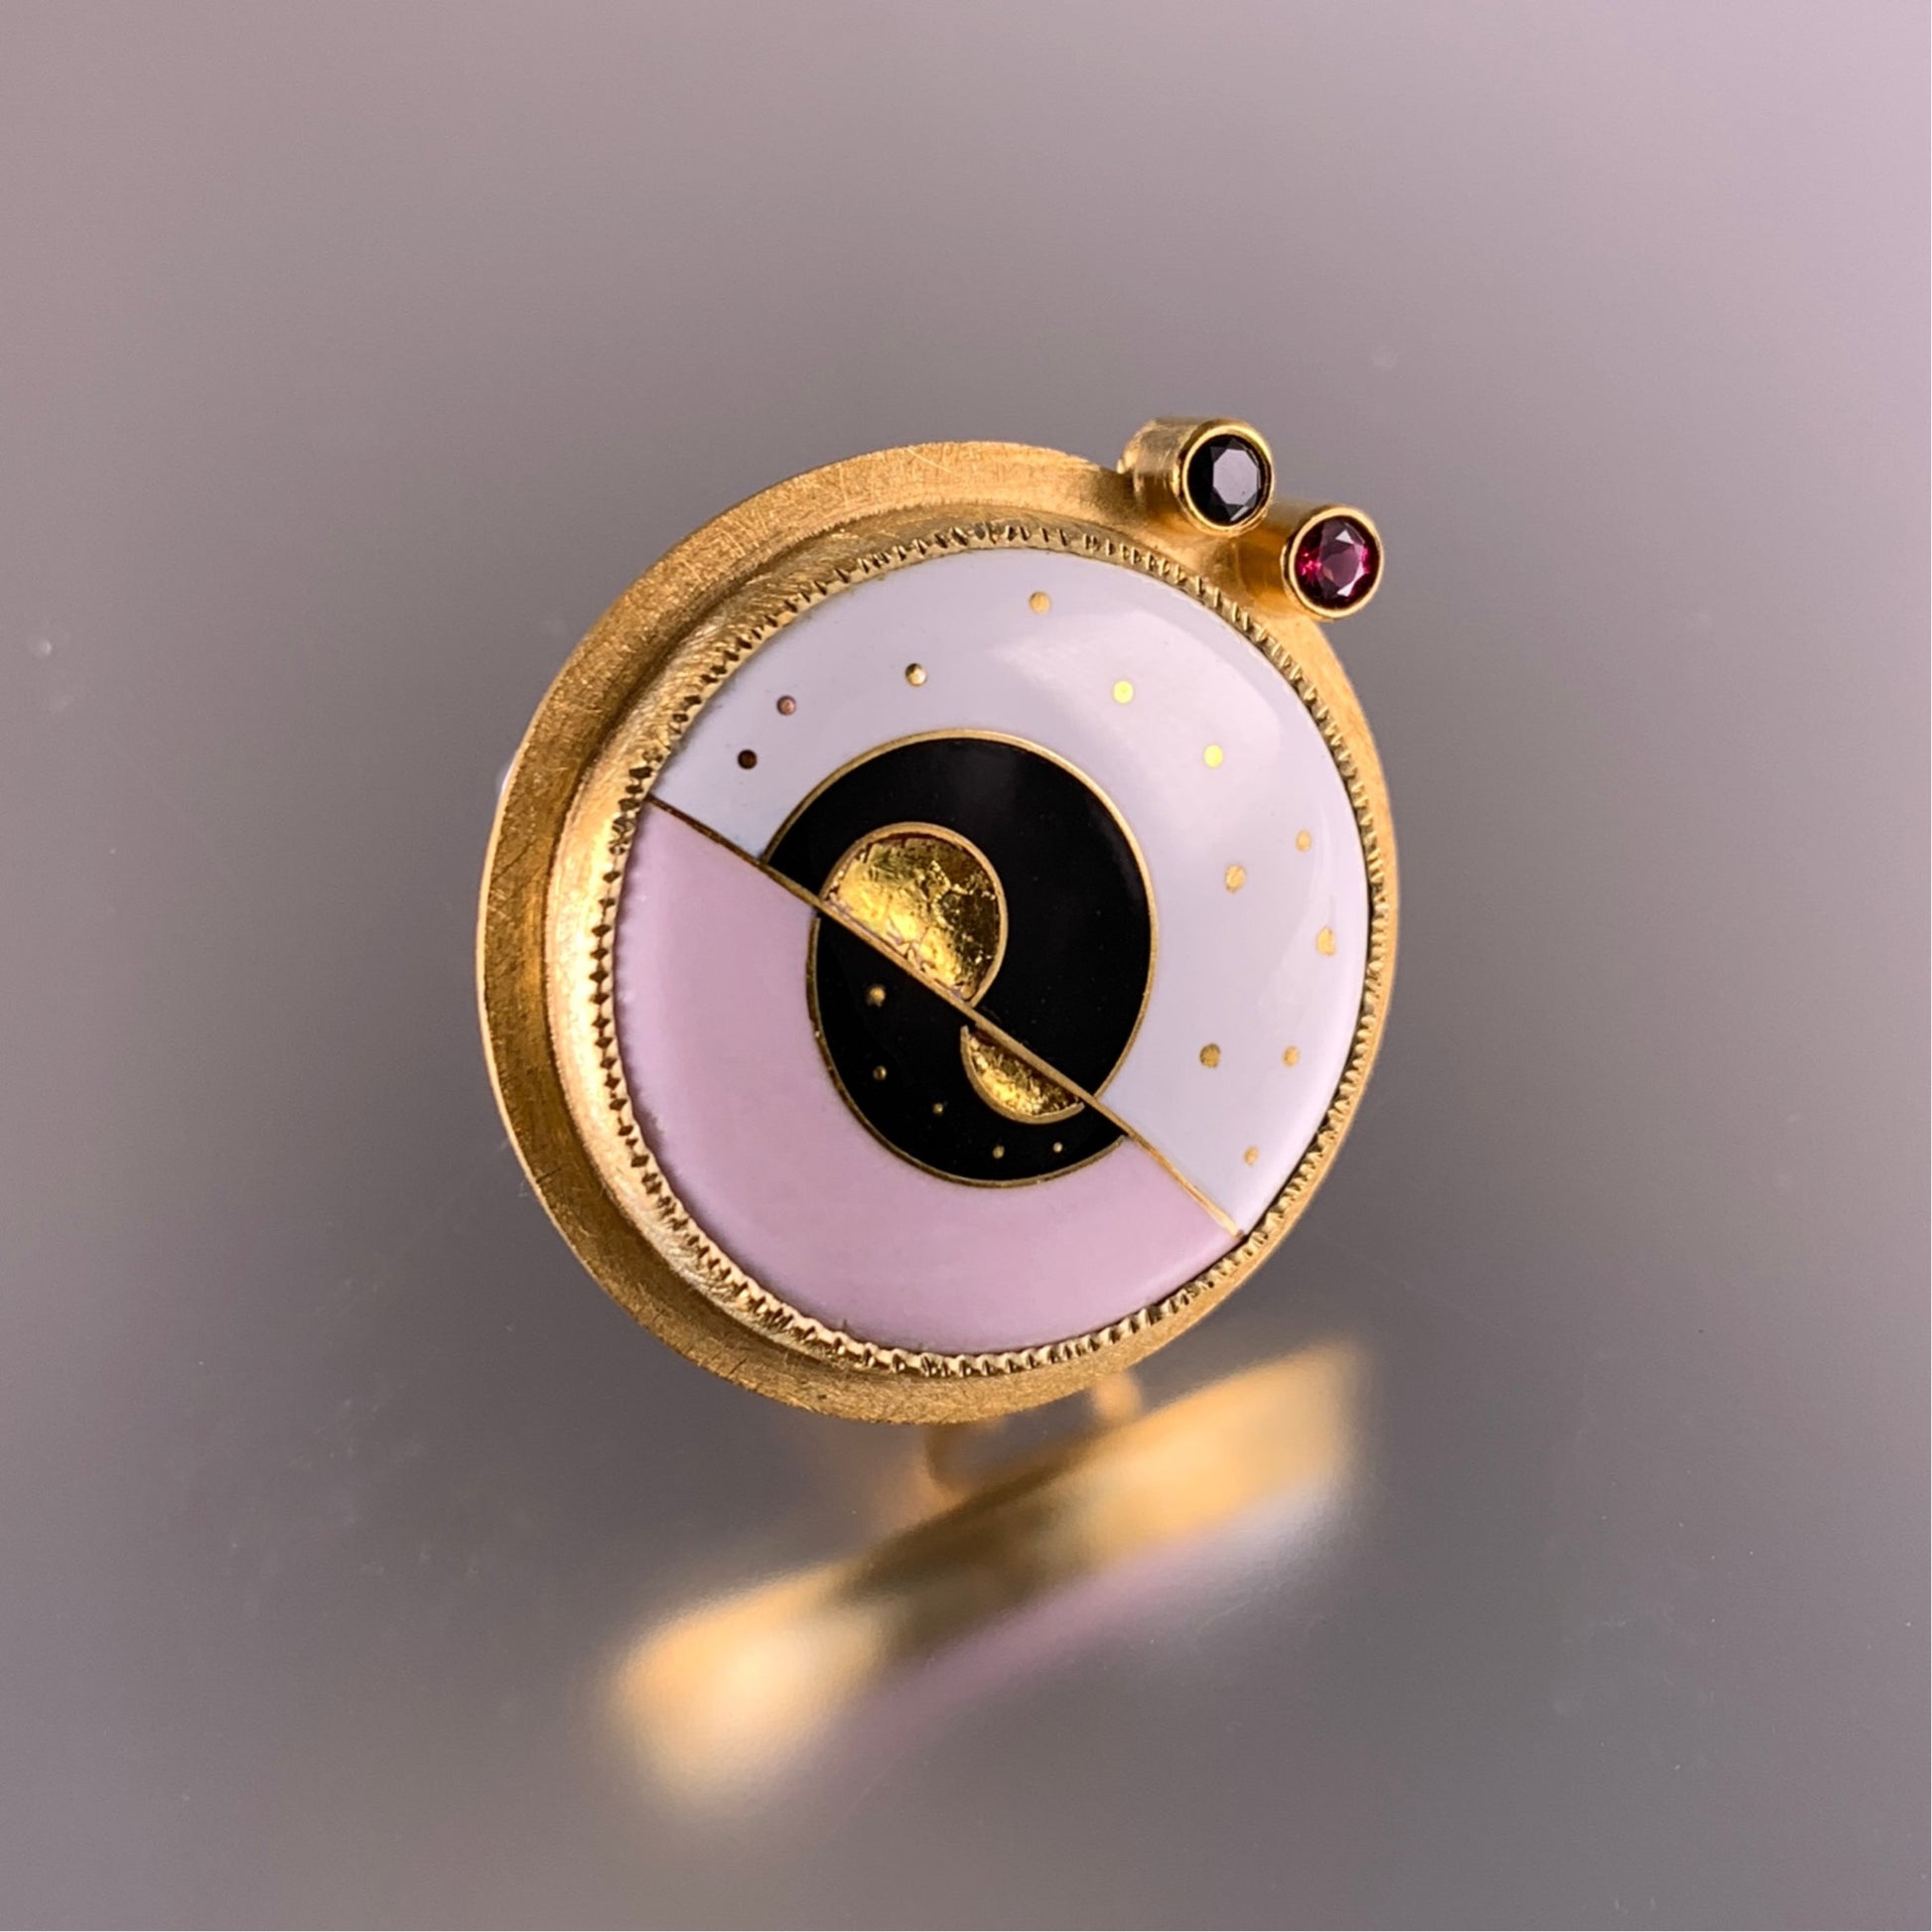 24k gold and gold vermeil cloisonne enamel pin brooch pendant